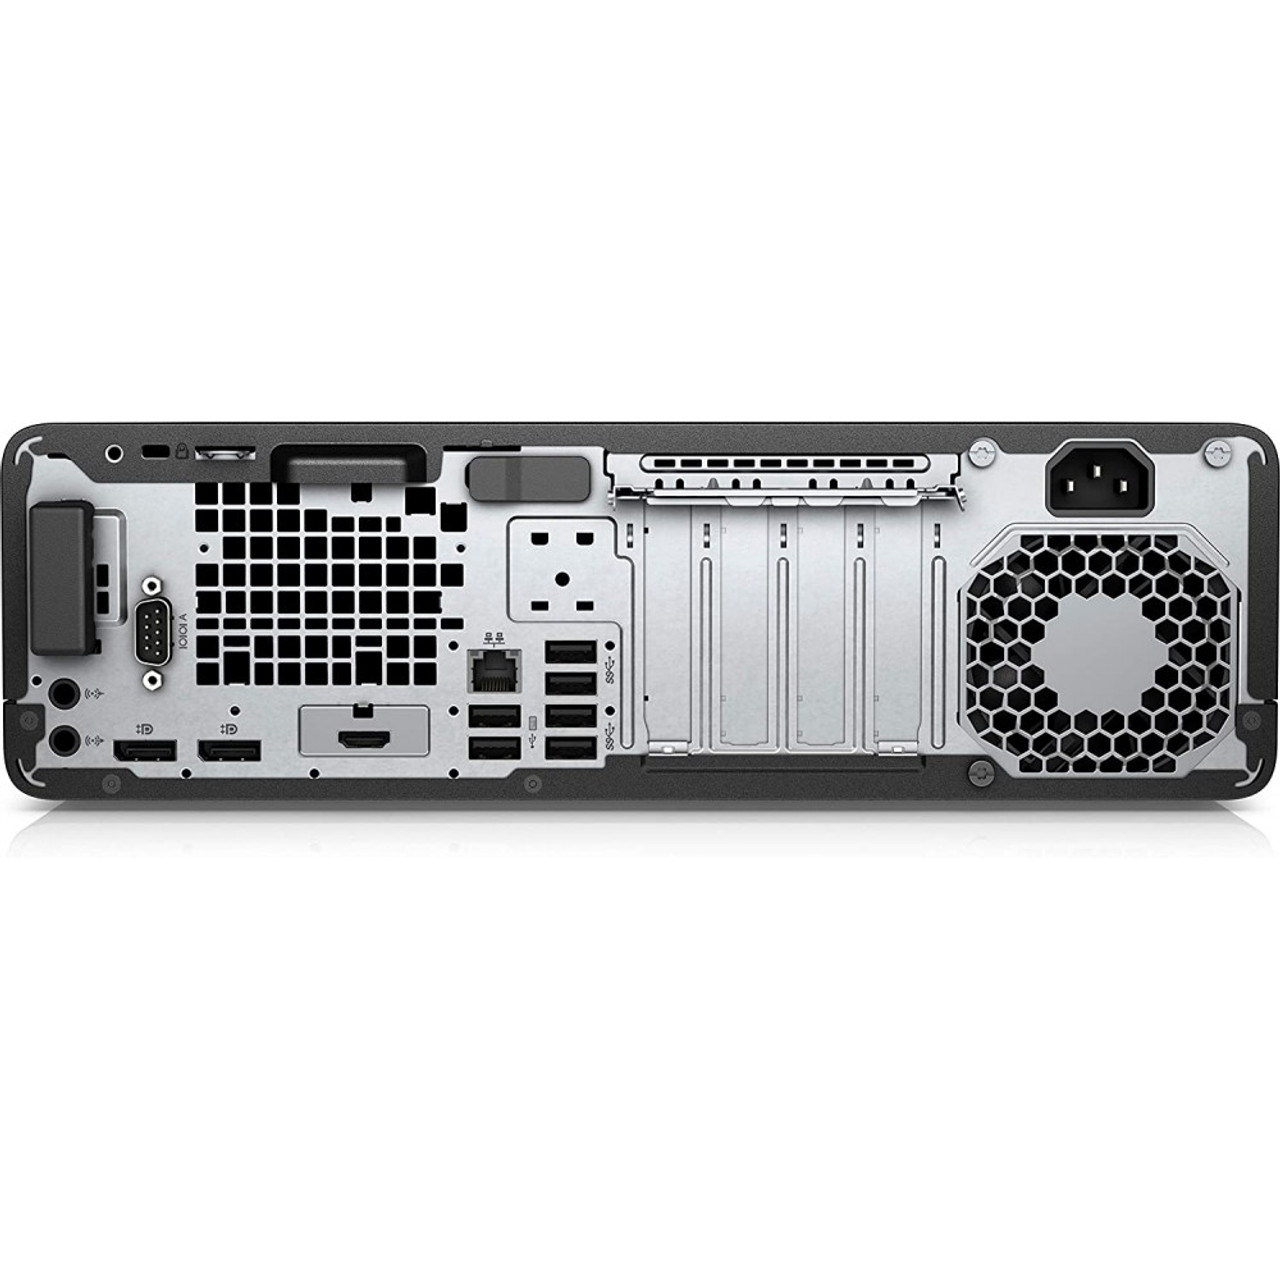 HP Elitedesk 800 G4 Desktop Intel Core i5-8500 3.10 GHz 8 GB 500GB W10P | Refurbished